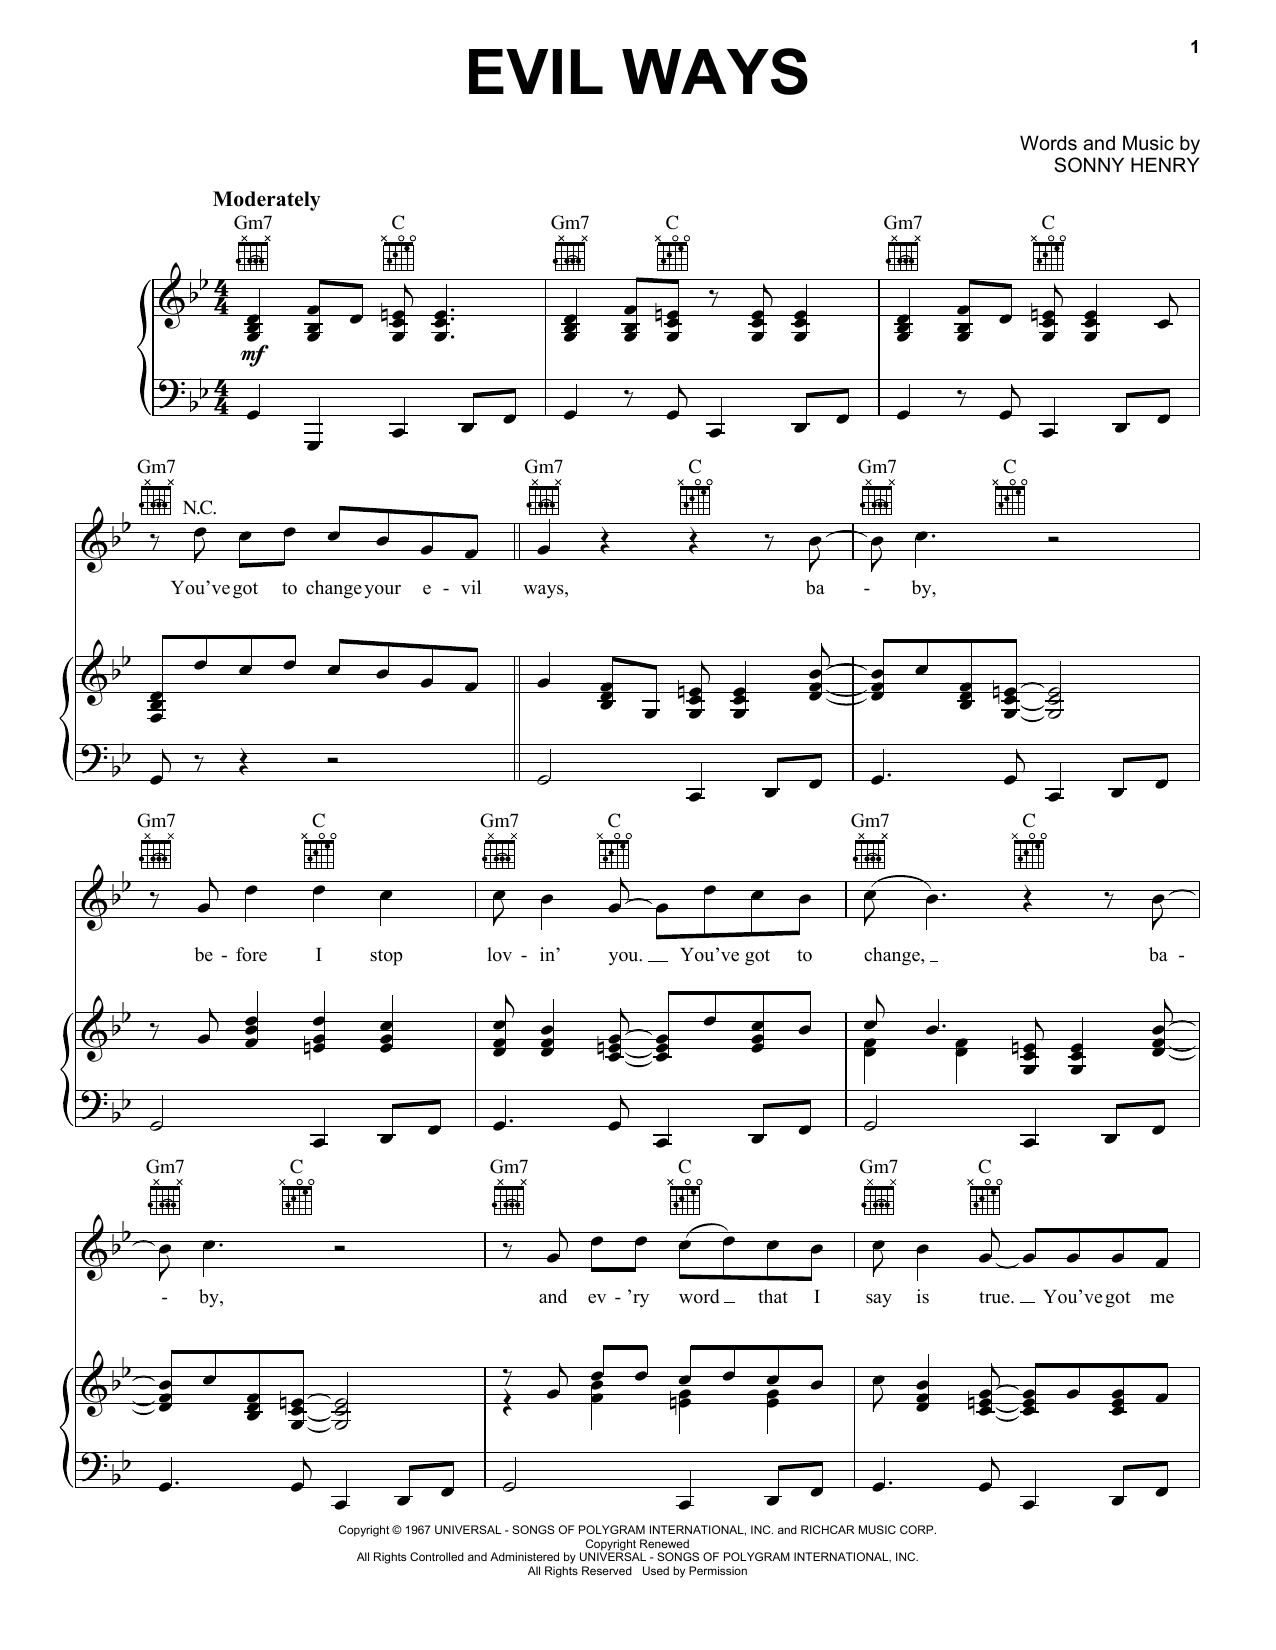 Santana Evil Ways Sheet Music Notes & Chords for Drums Transcription - Download or Print PDF